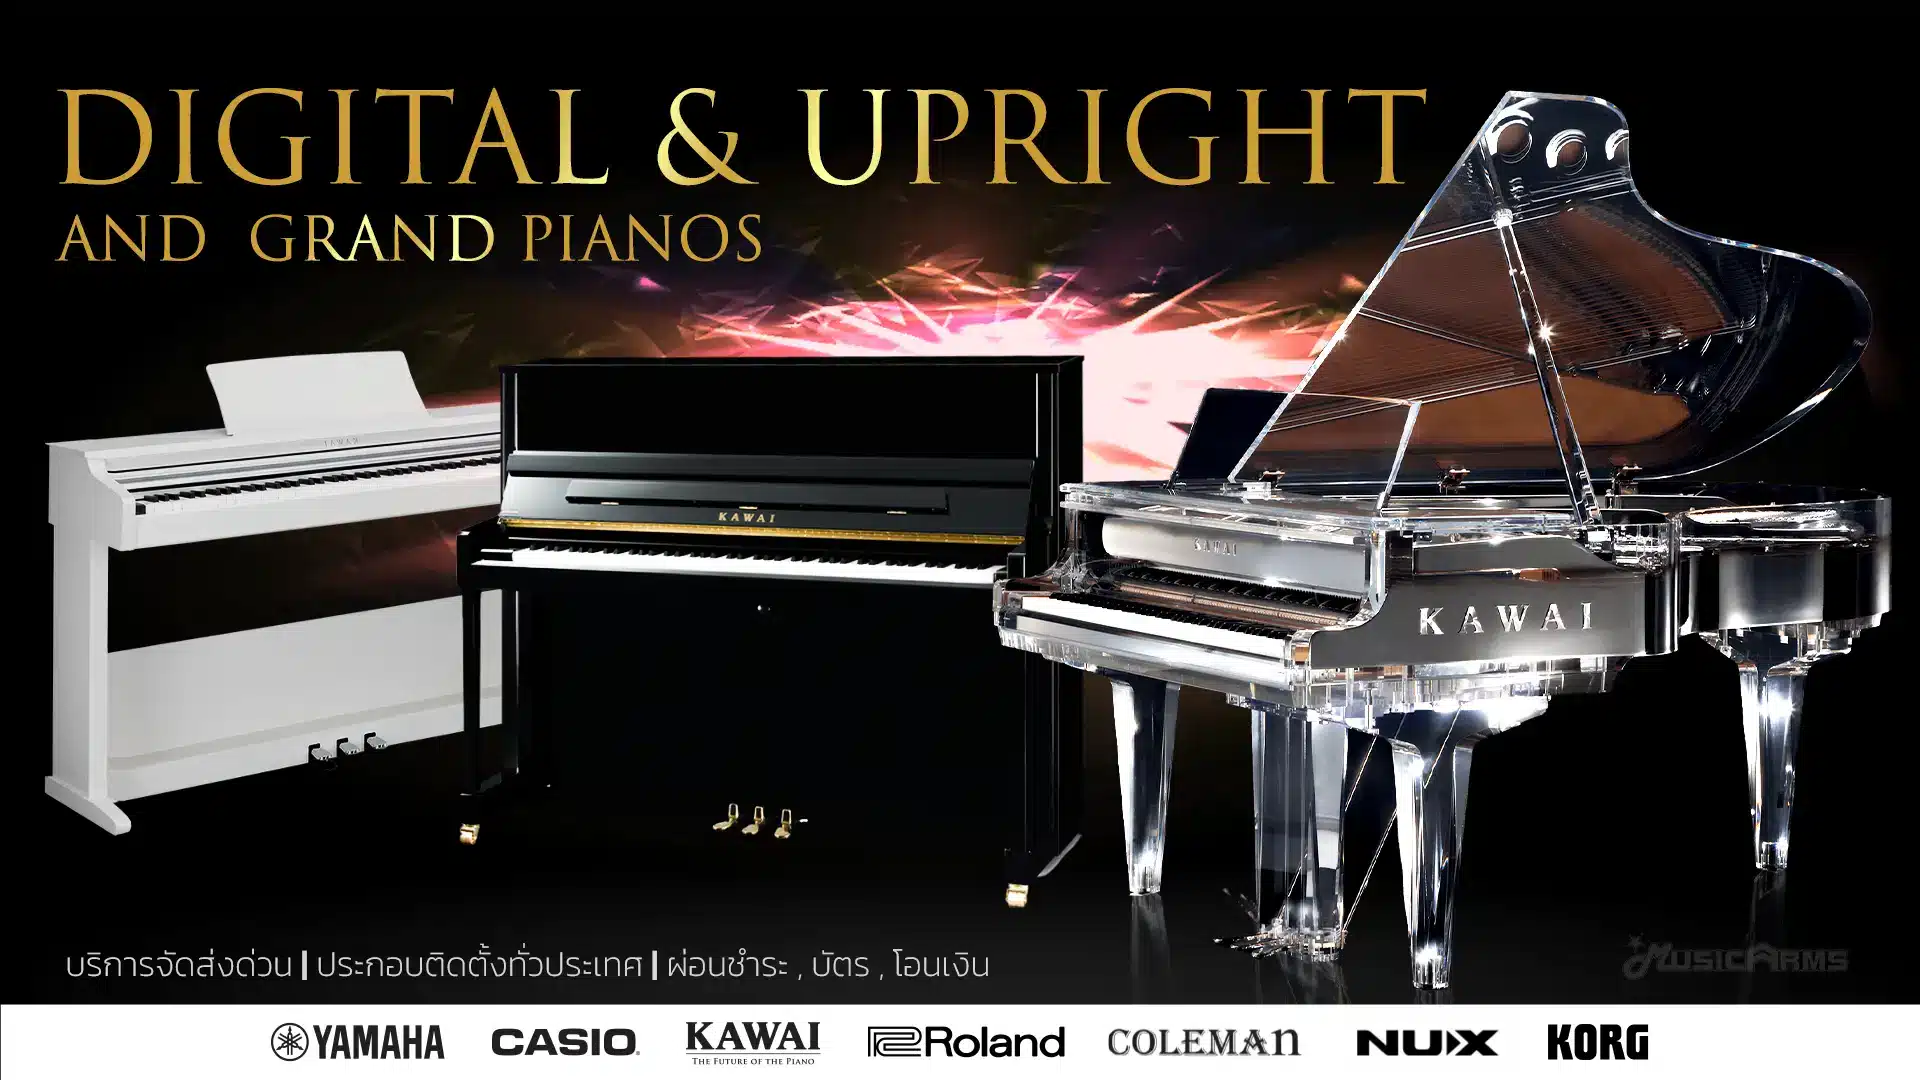 Digital & Upright and Grand Pianos